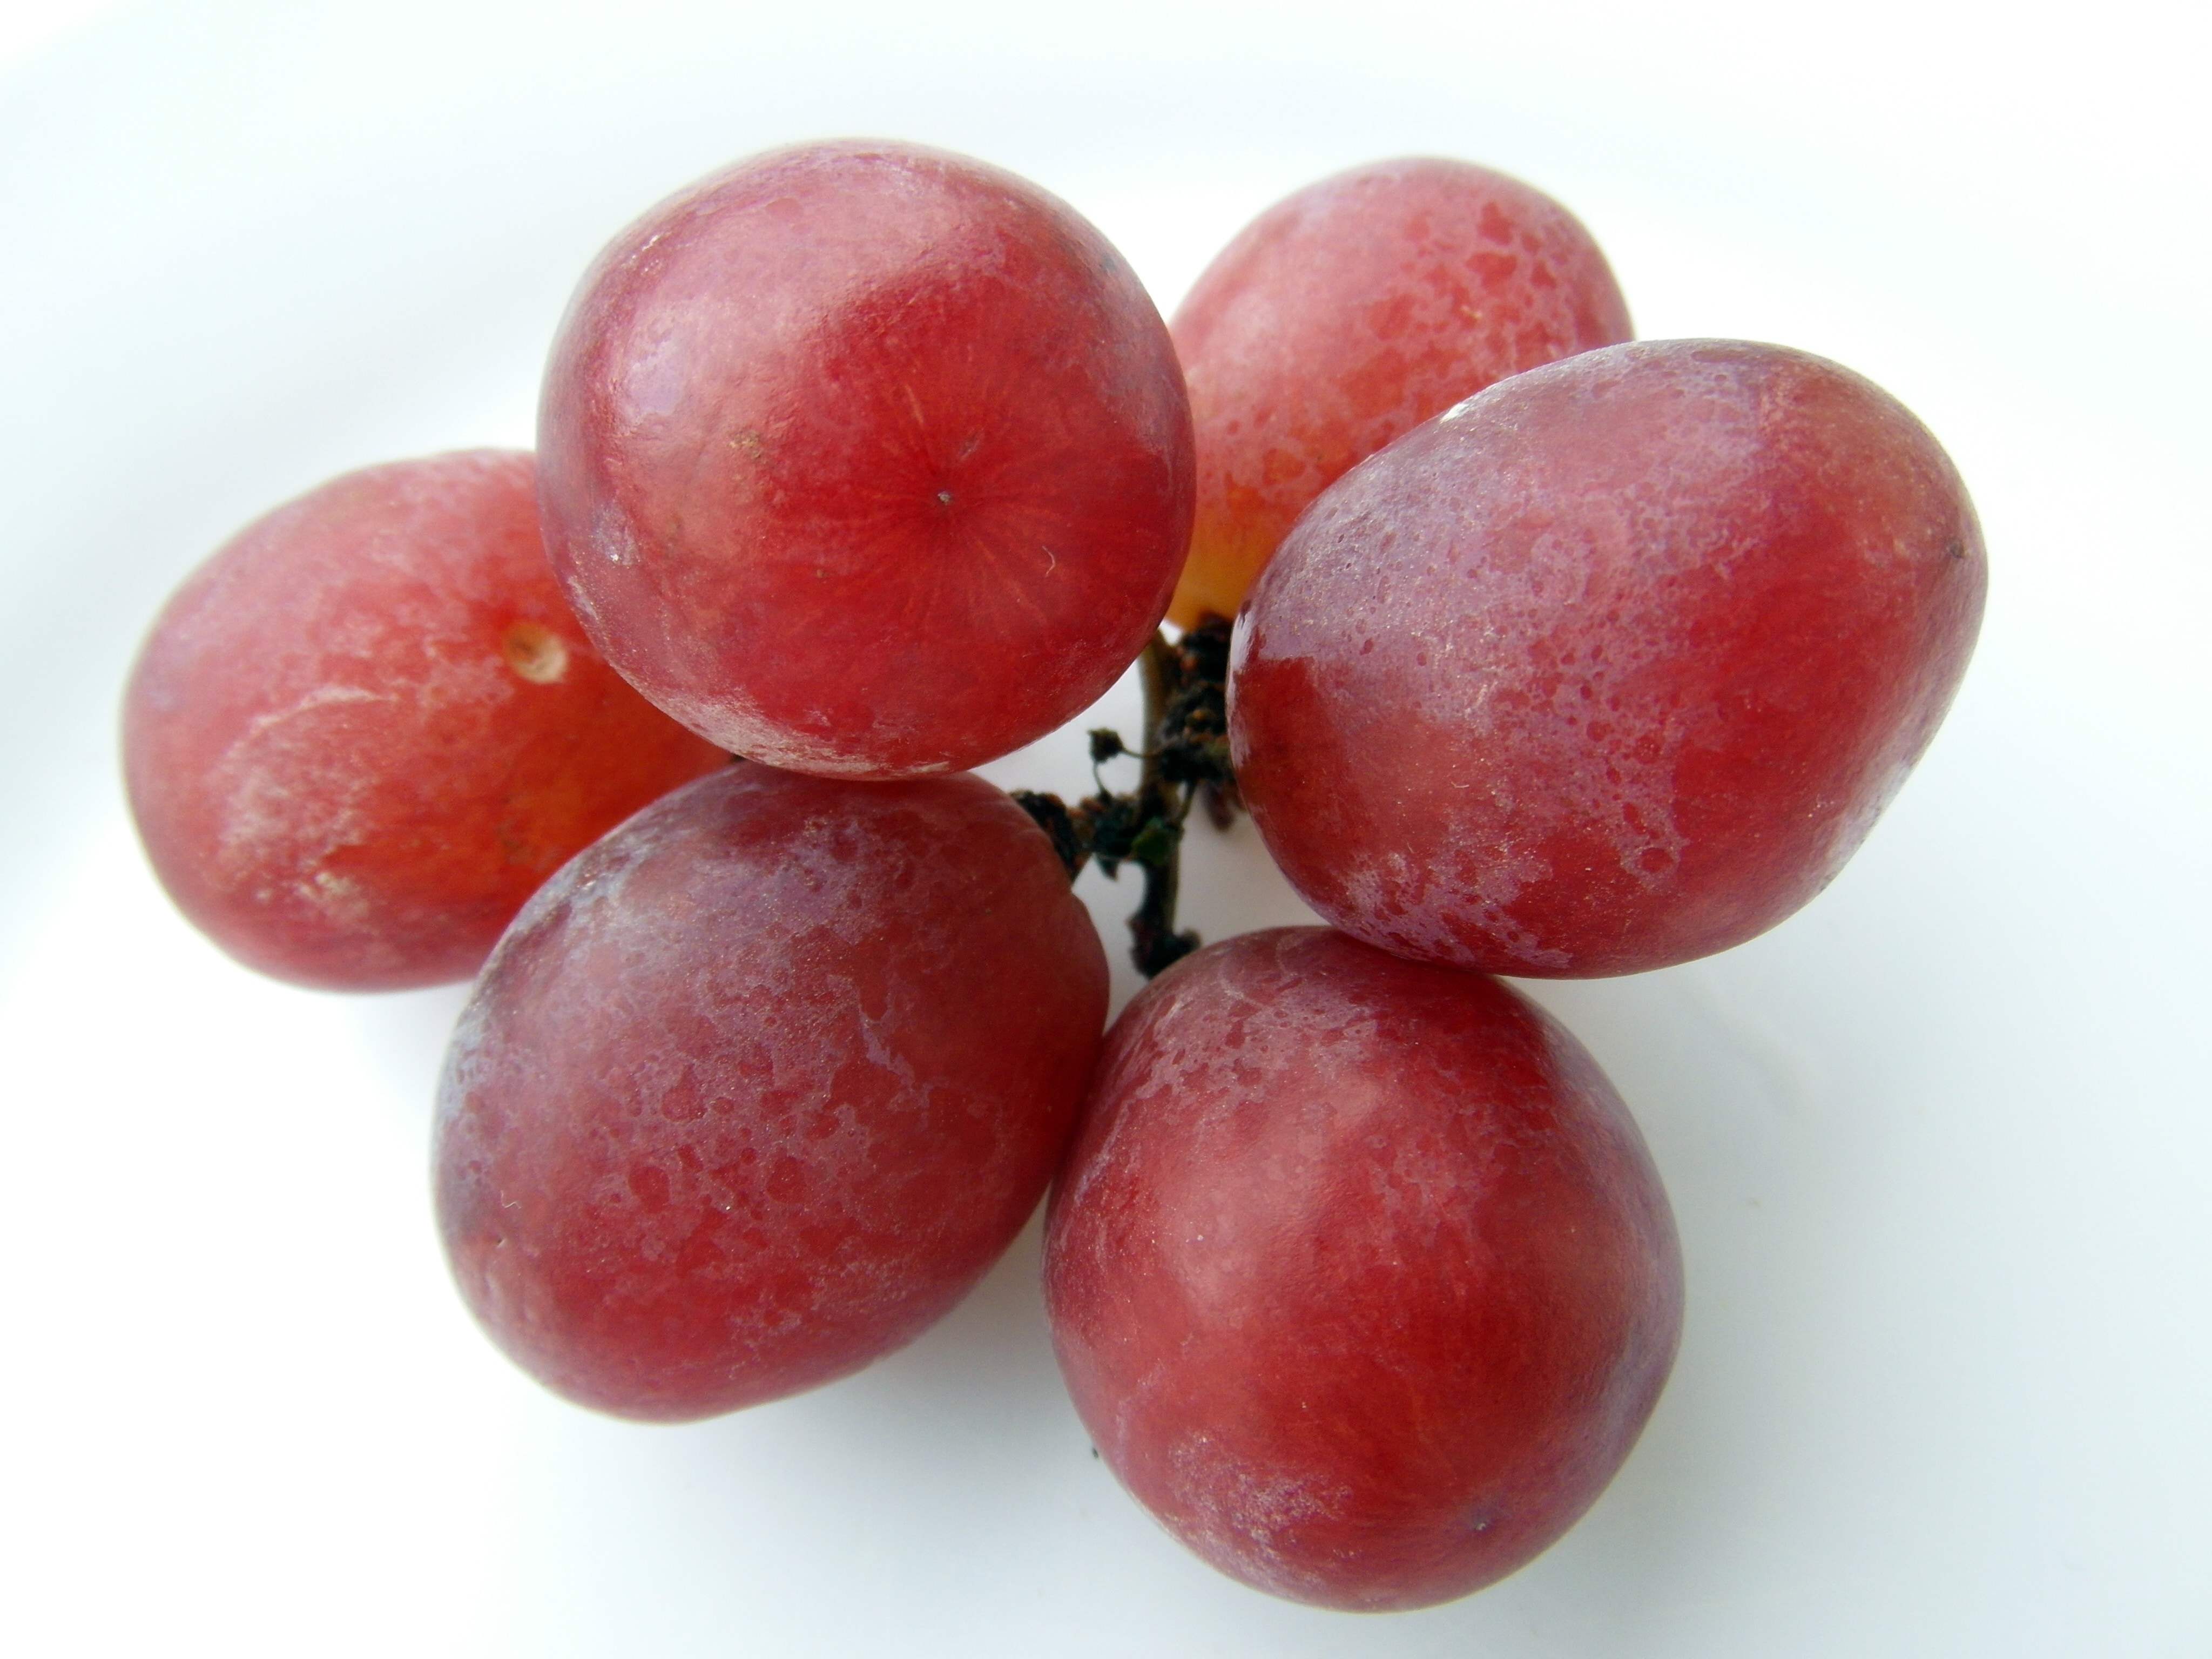 red grape fruits